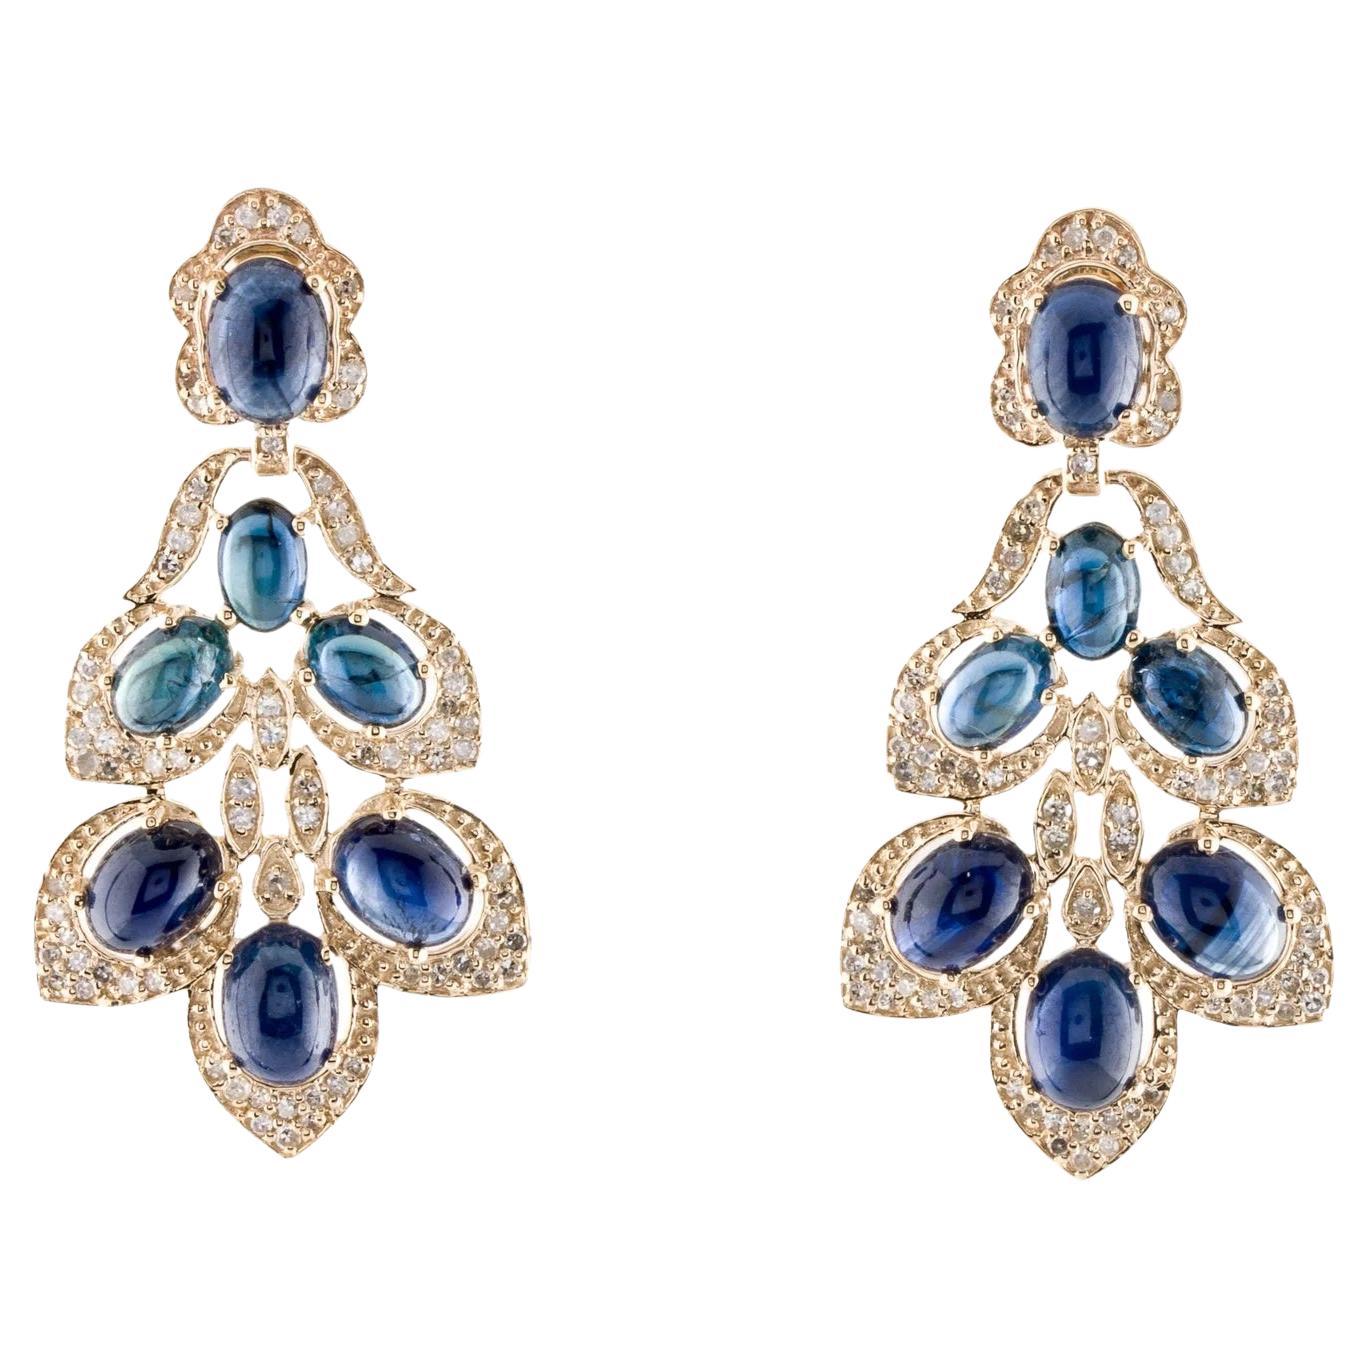 14K Sapphire & Diamond Drop Earrings - 15.02ctw Oval Sapphire Cabochons